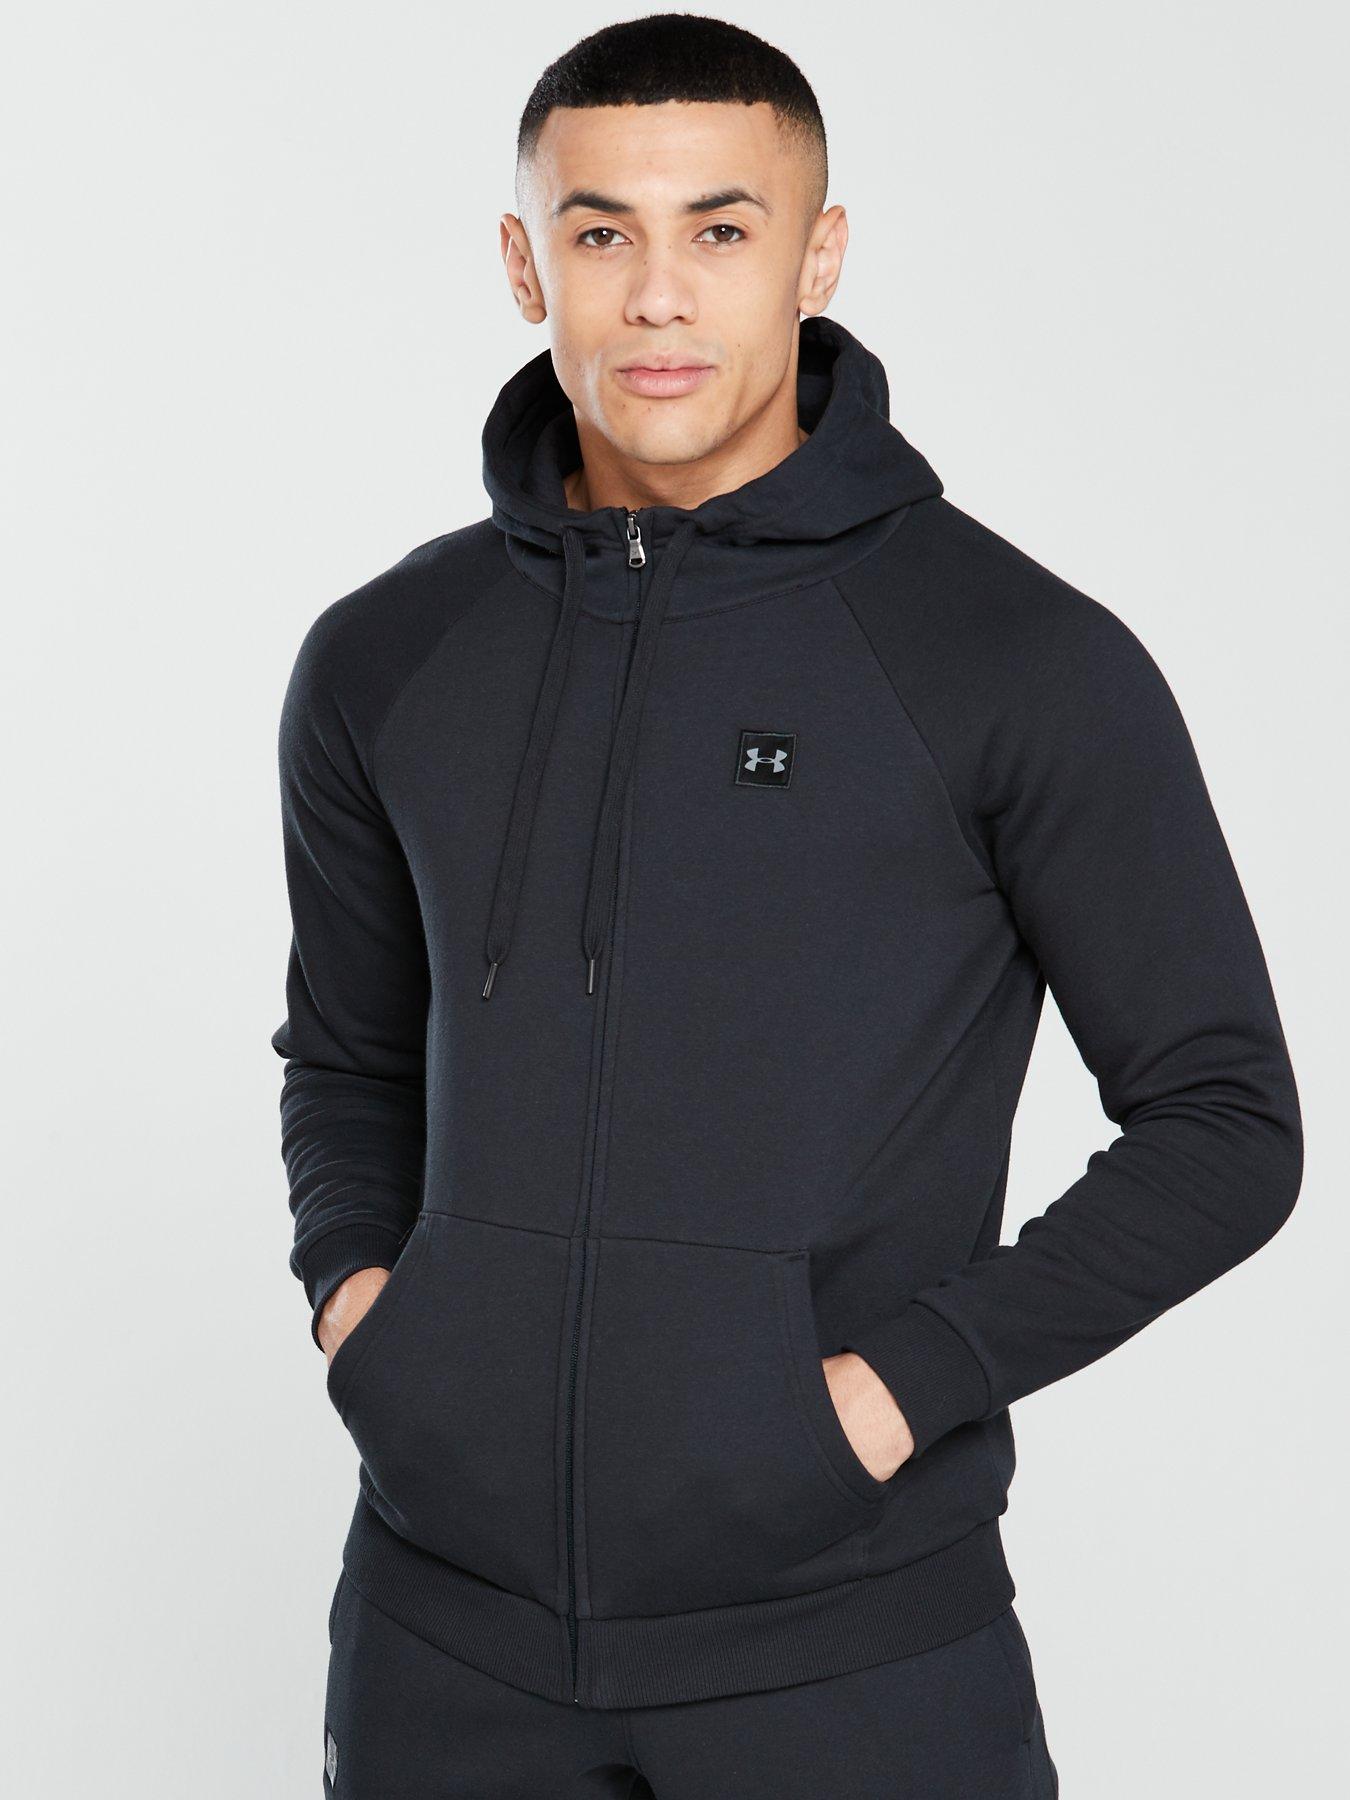 black and grey under armour hoodie